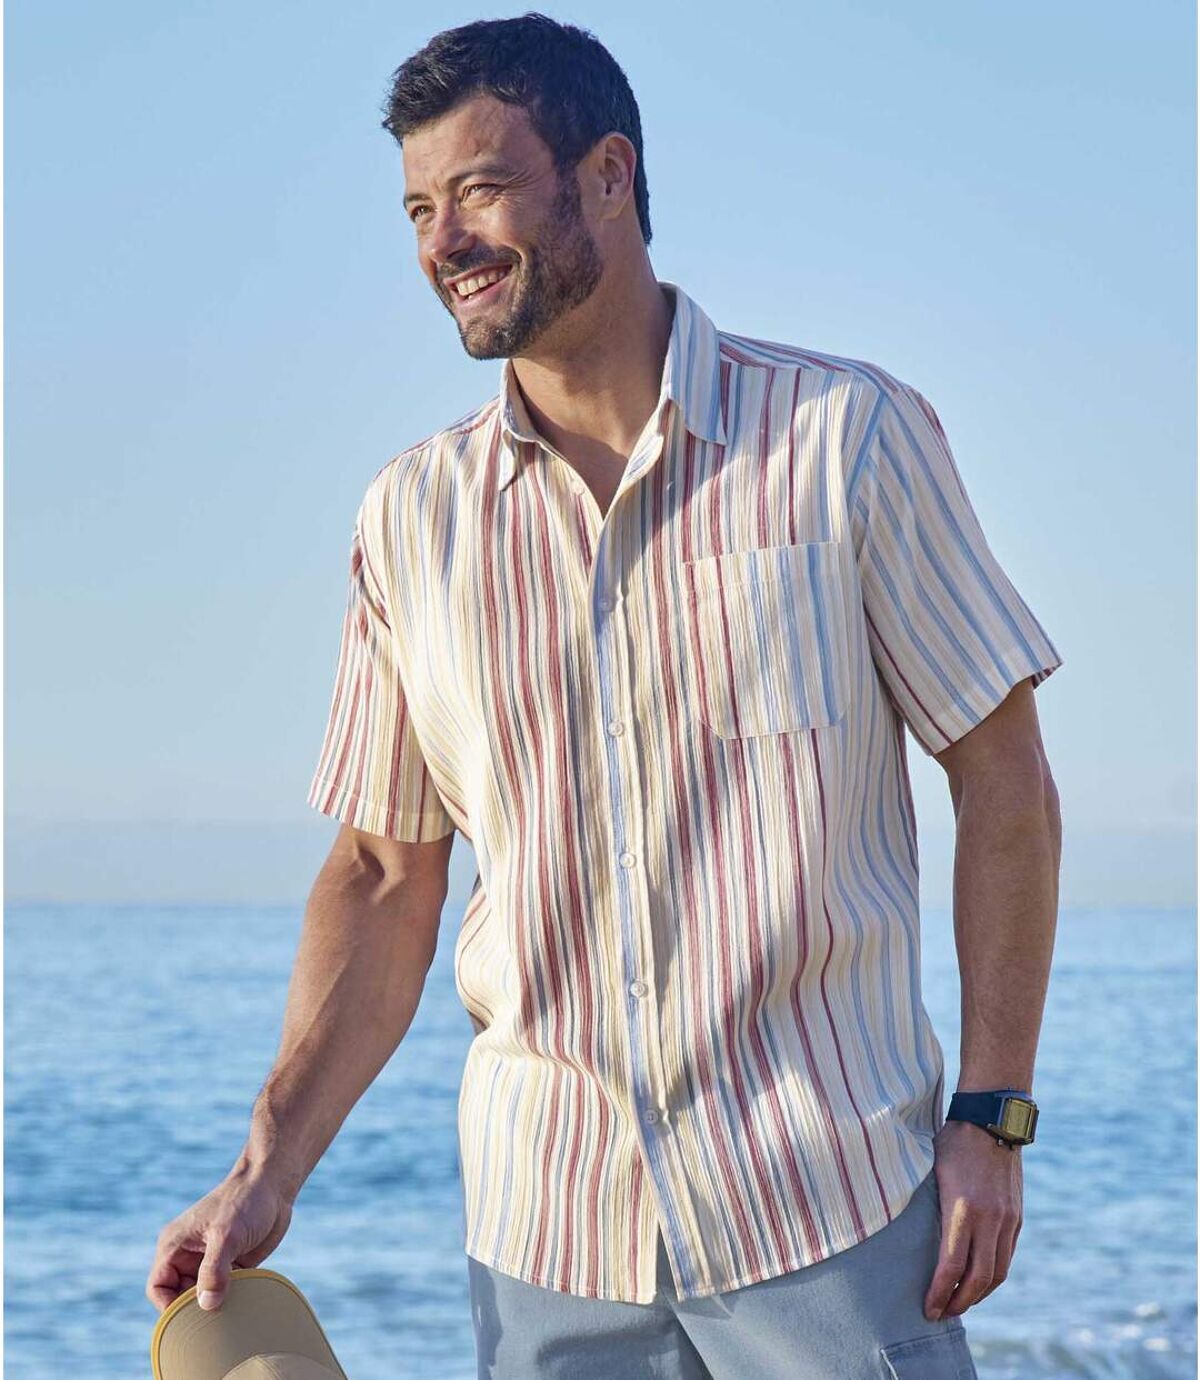 Men's Striped Ecru Crepe Shirt Atlas For Men